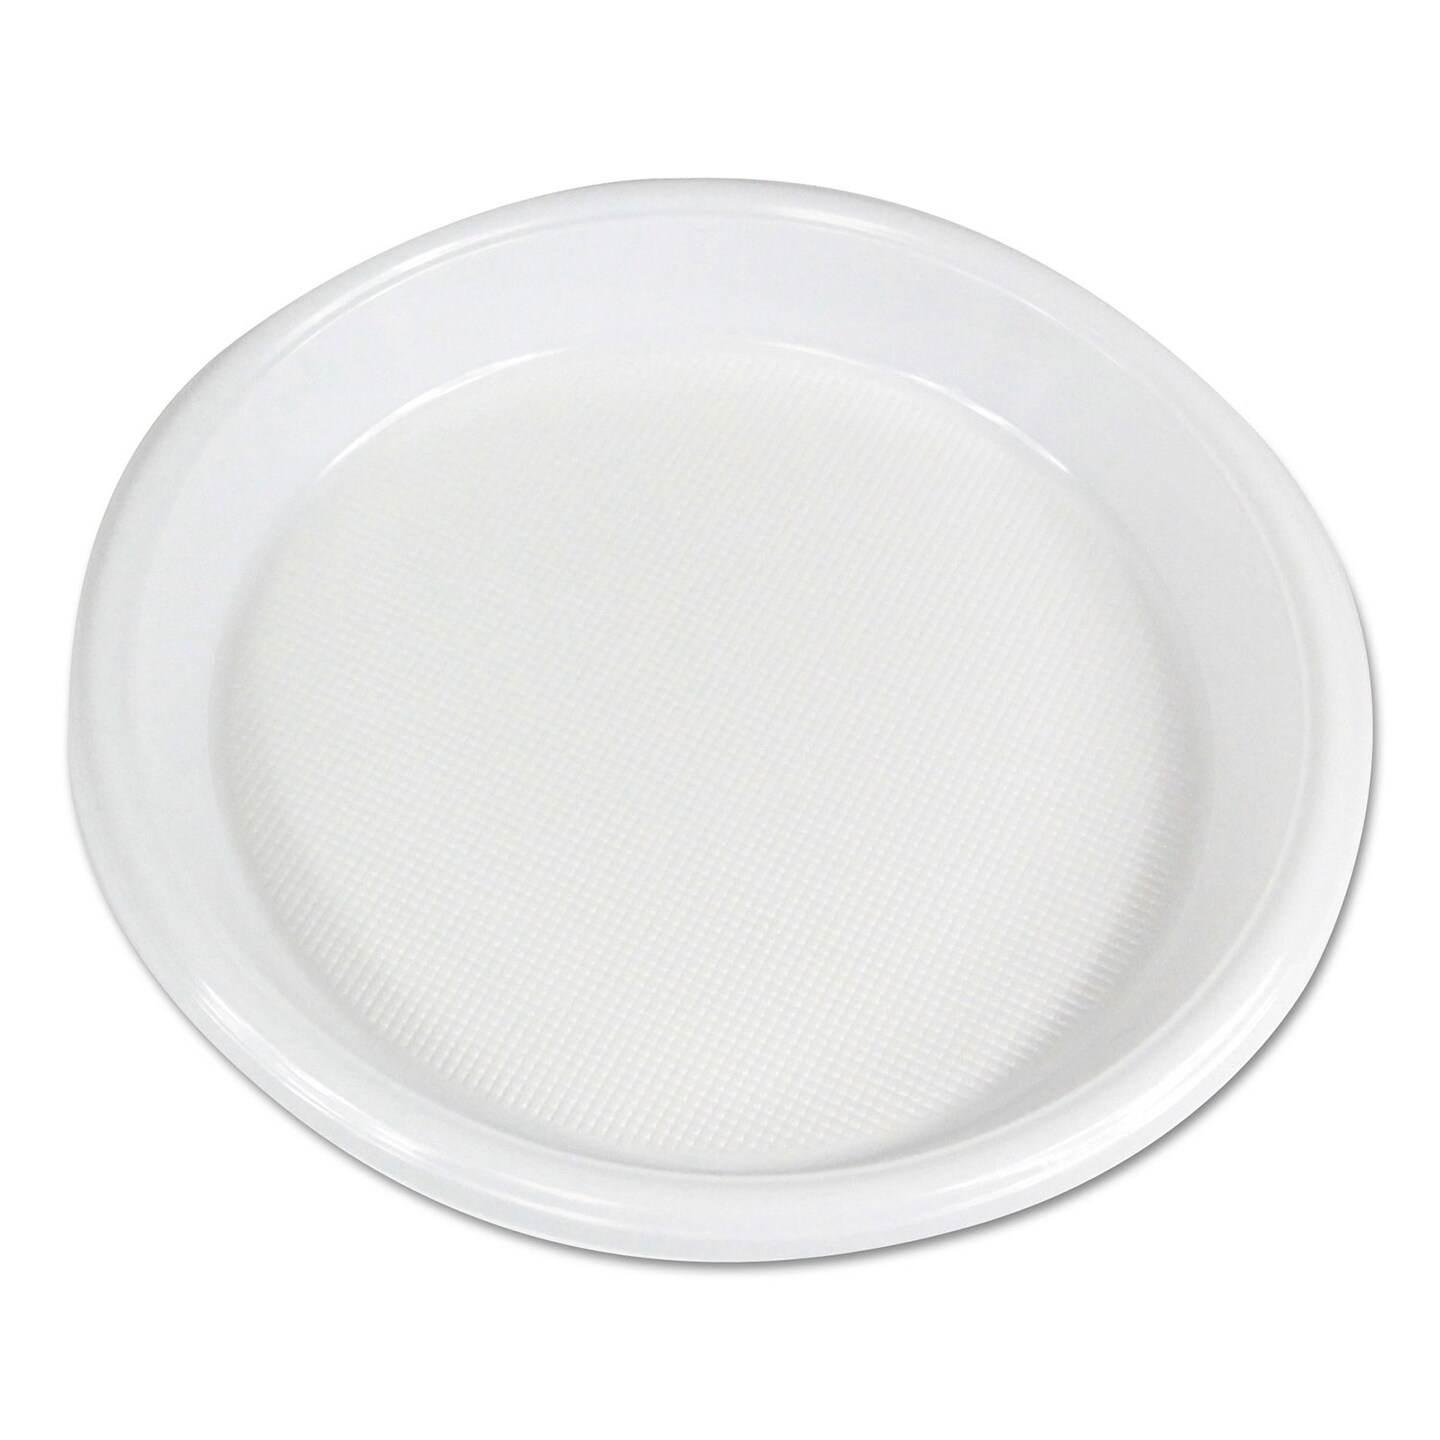 Boardwalk Hi-Impact Plastic Dinnerware, Plate, 10 Diameter, White, 500-carton